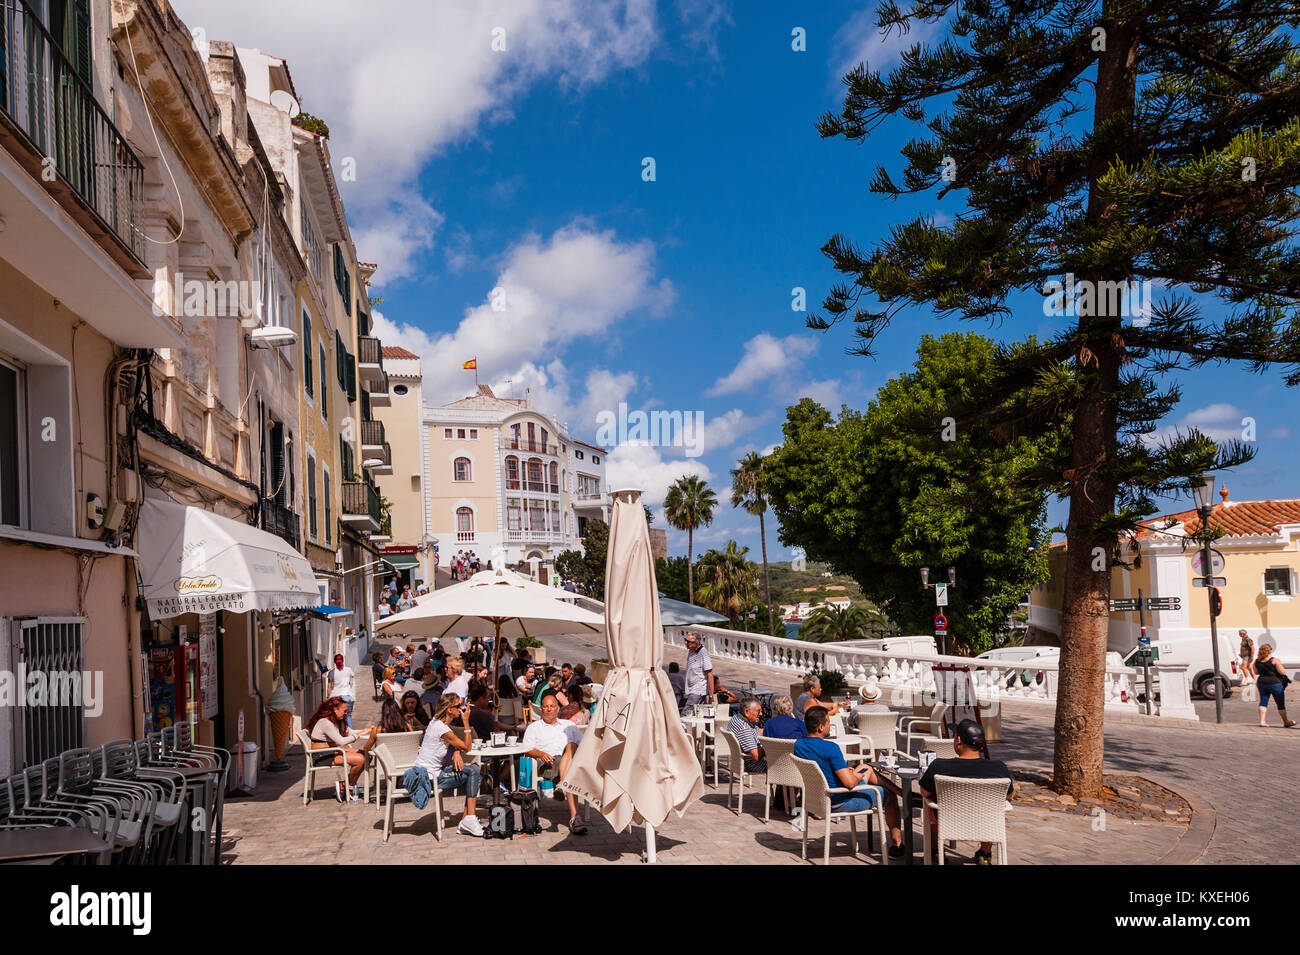 Menschen sitzen in einer Bar Cafe in Mahon, Menorca, Balearen, Spanien Stockfoto